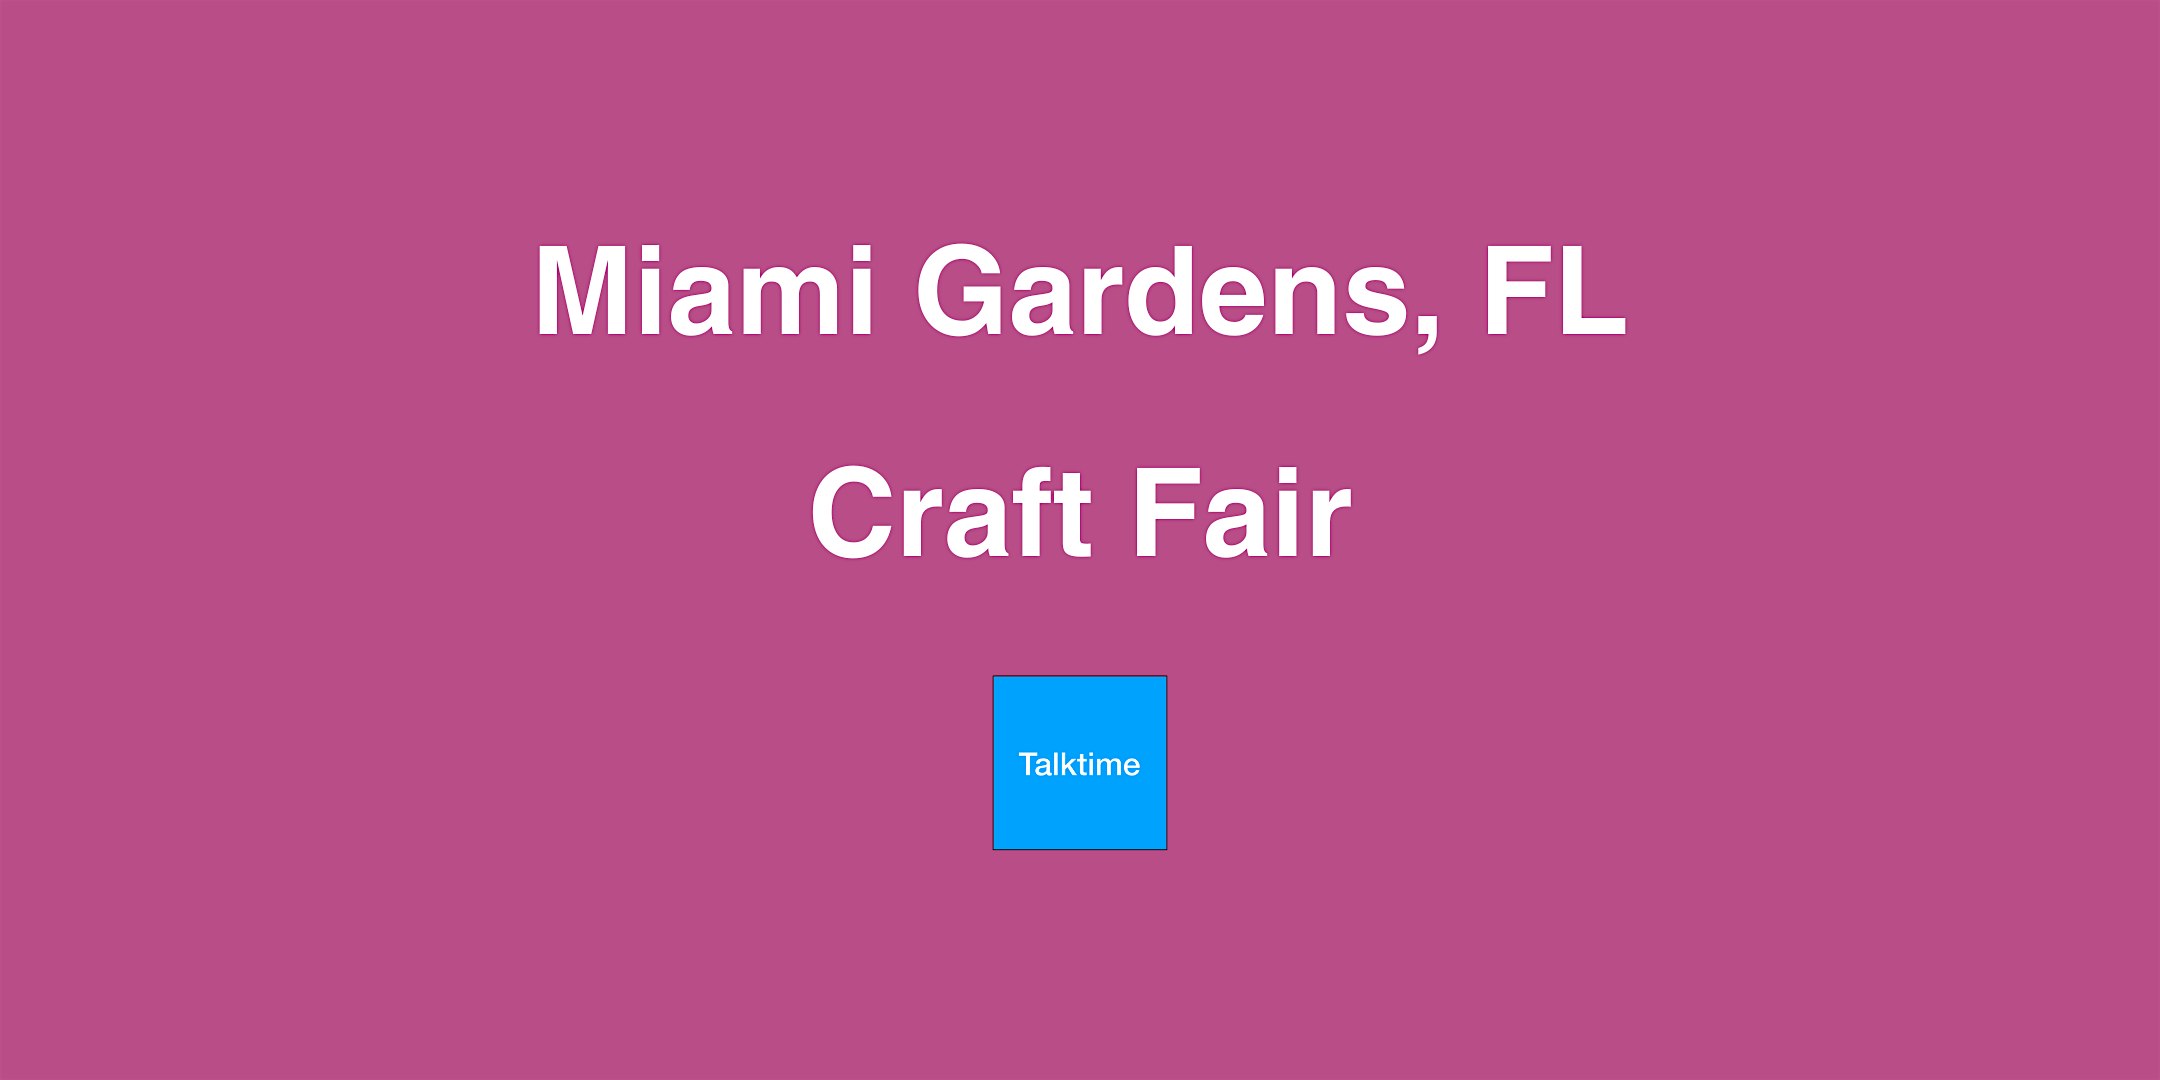 Craft Fair - Miami Gardens